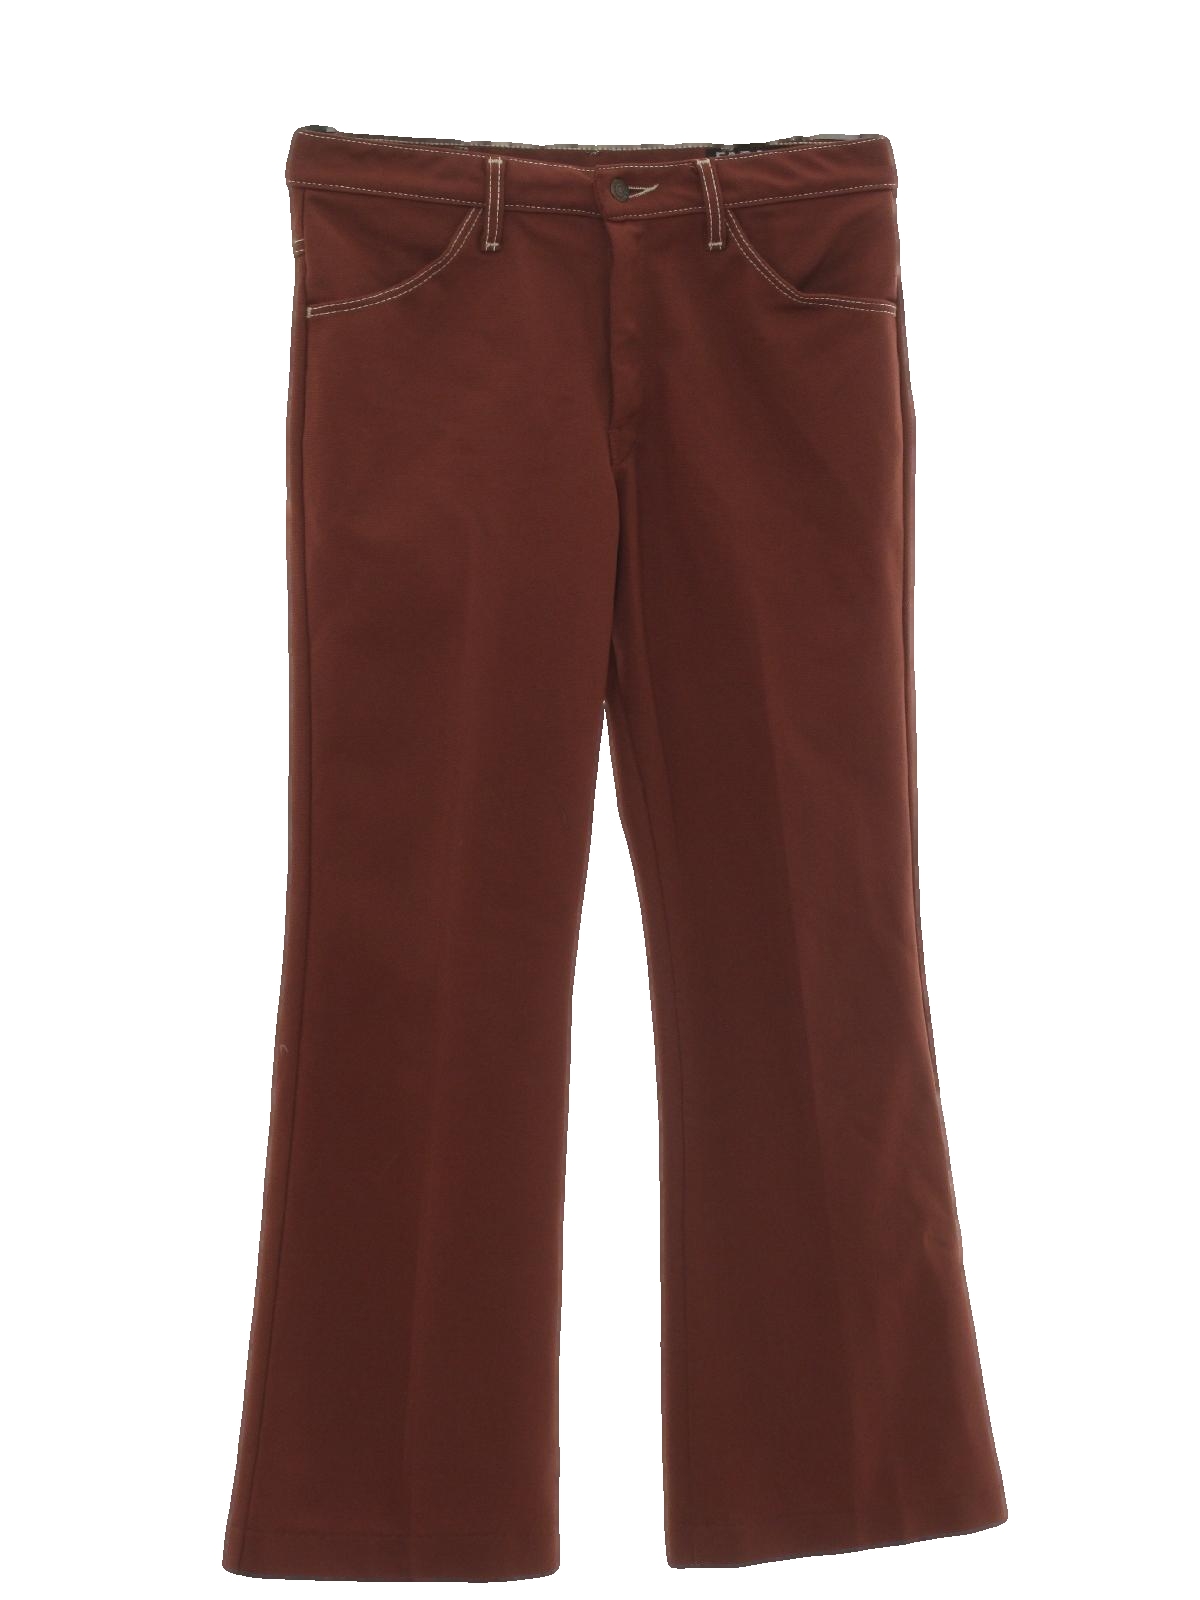 1970's Vintage Farah Bellbottom Pants: 70s -Farah- Mens dusty rose ...